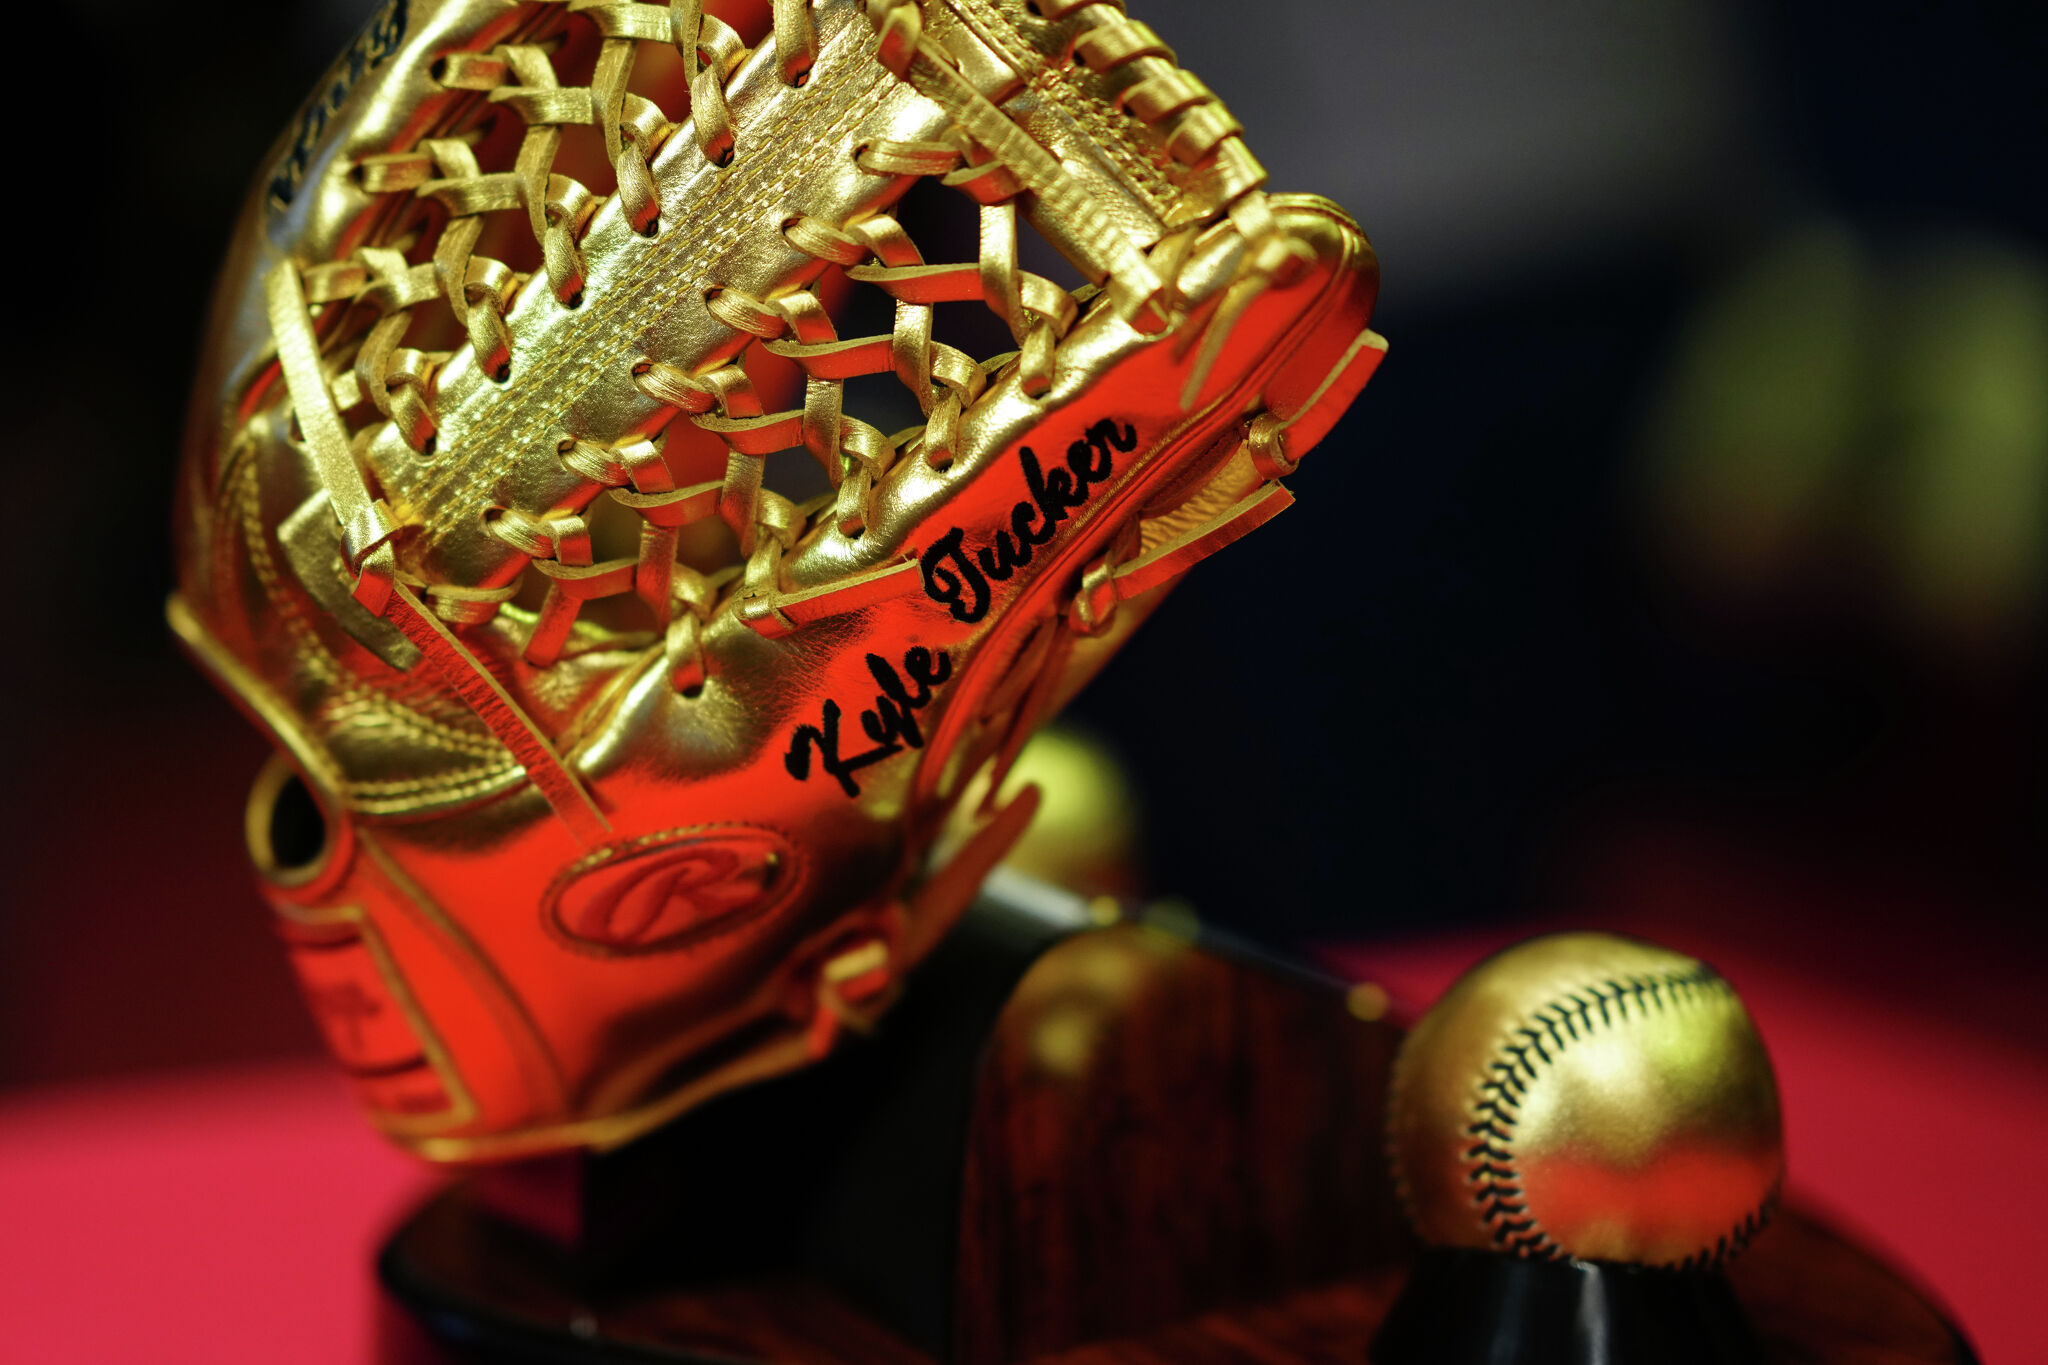 DJ LeMahieu Wins Fourth Career MLB Gold Glove Award  LSU